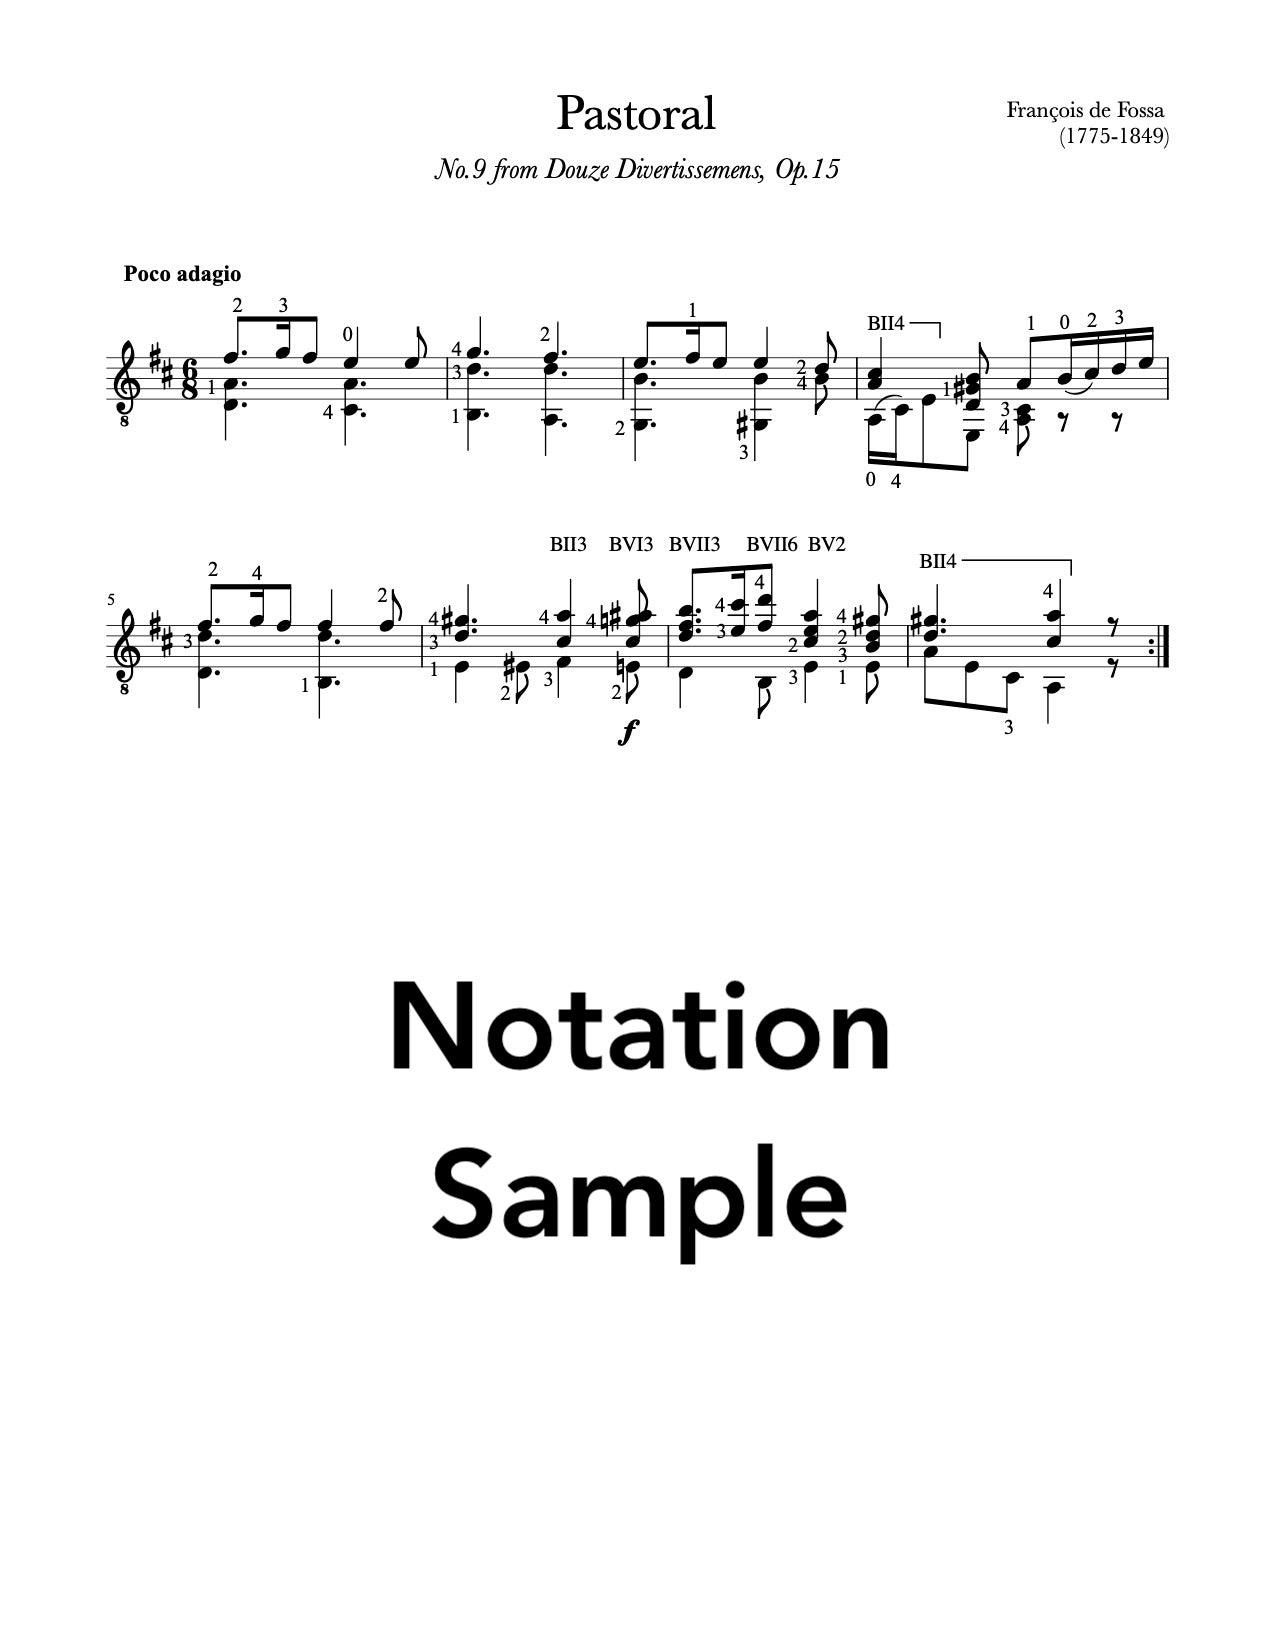 Pastoral, No.9 from Douze Divertissemens, Op.15 by François de Fossa - Notation Sample